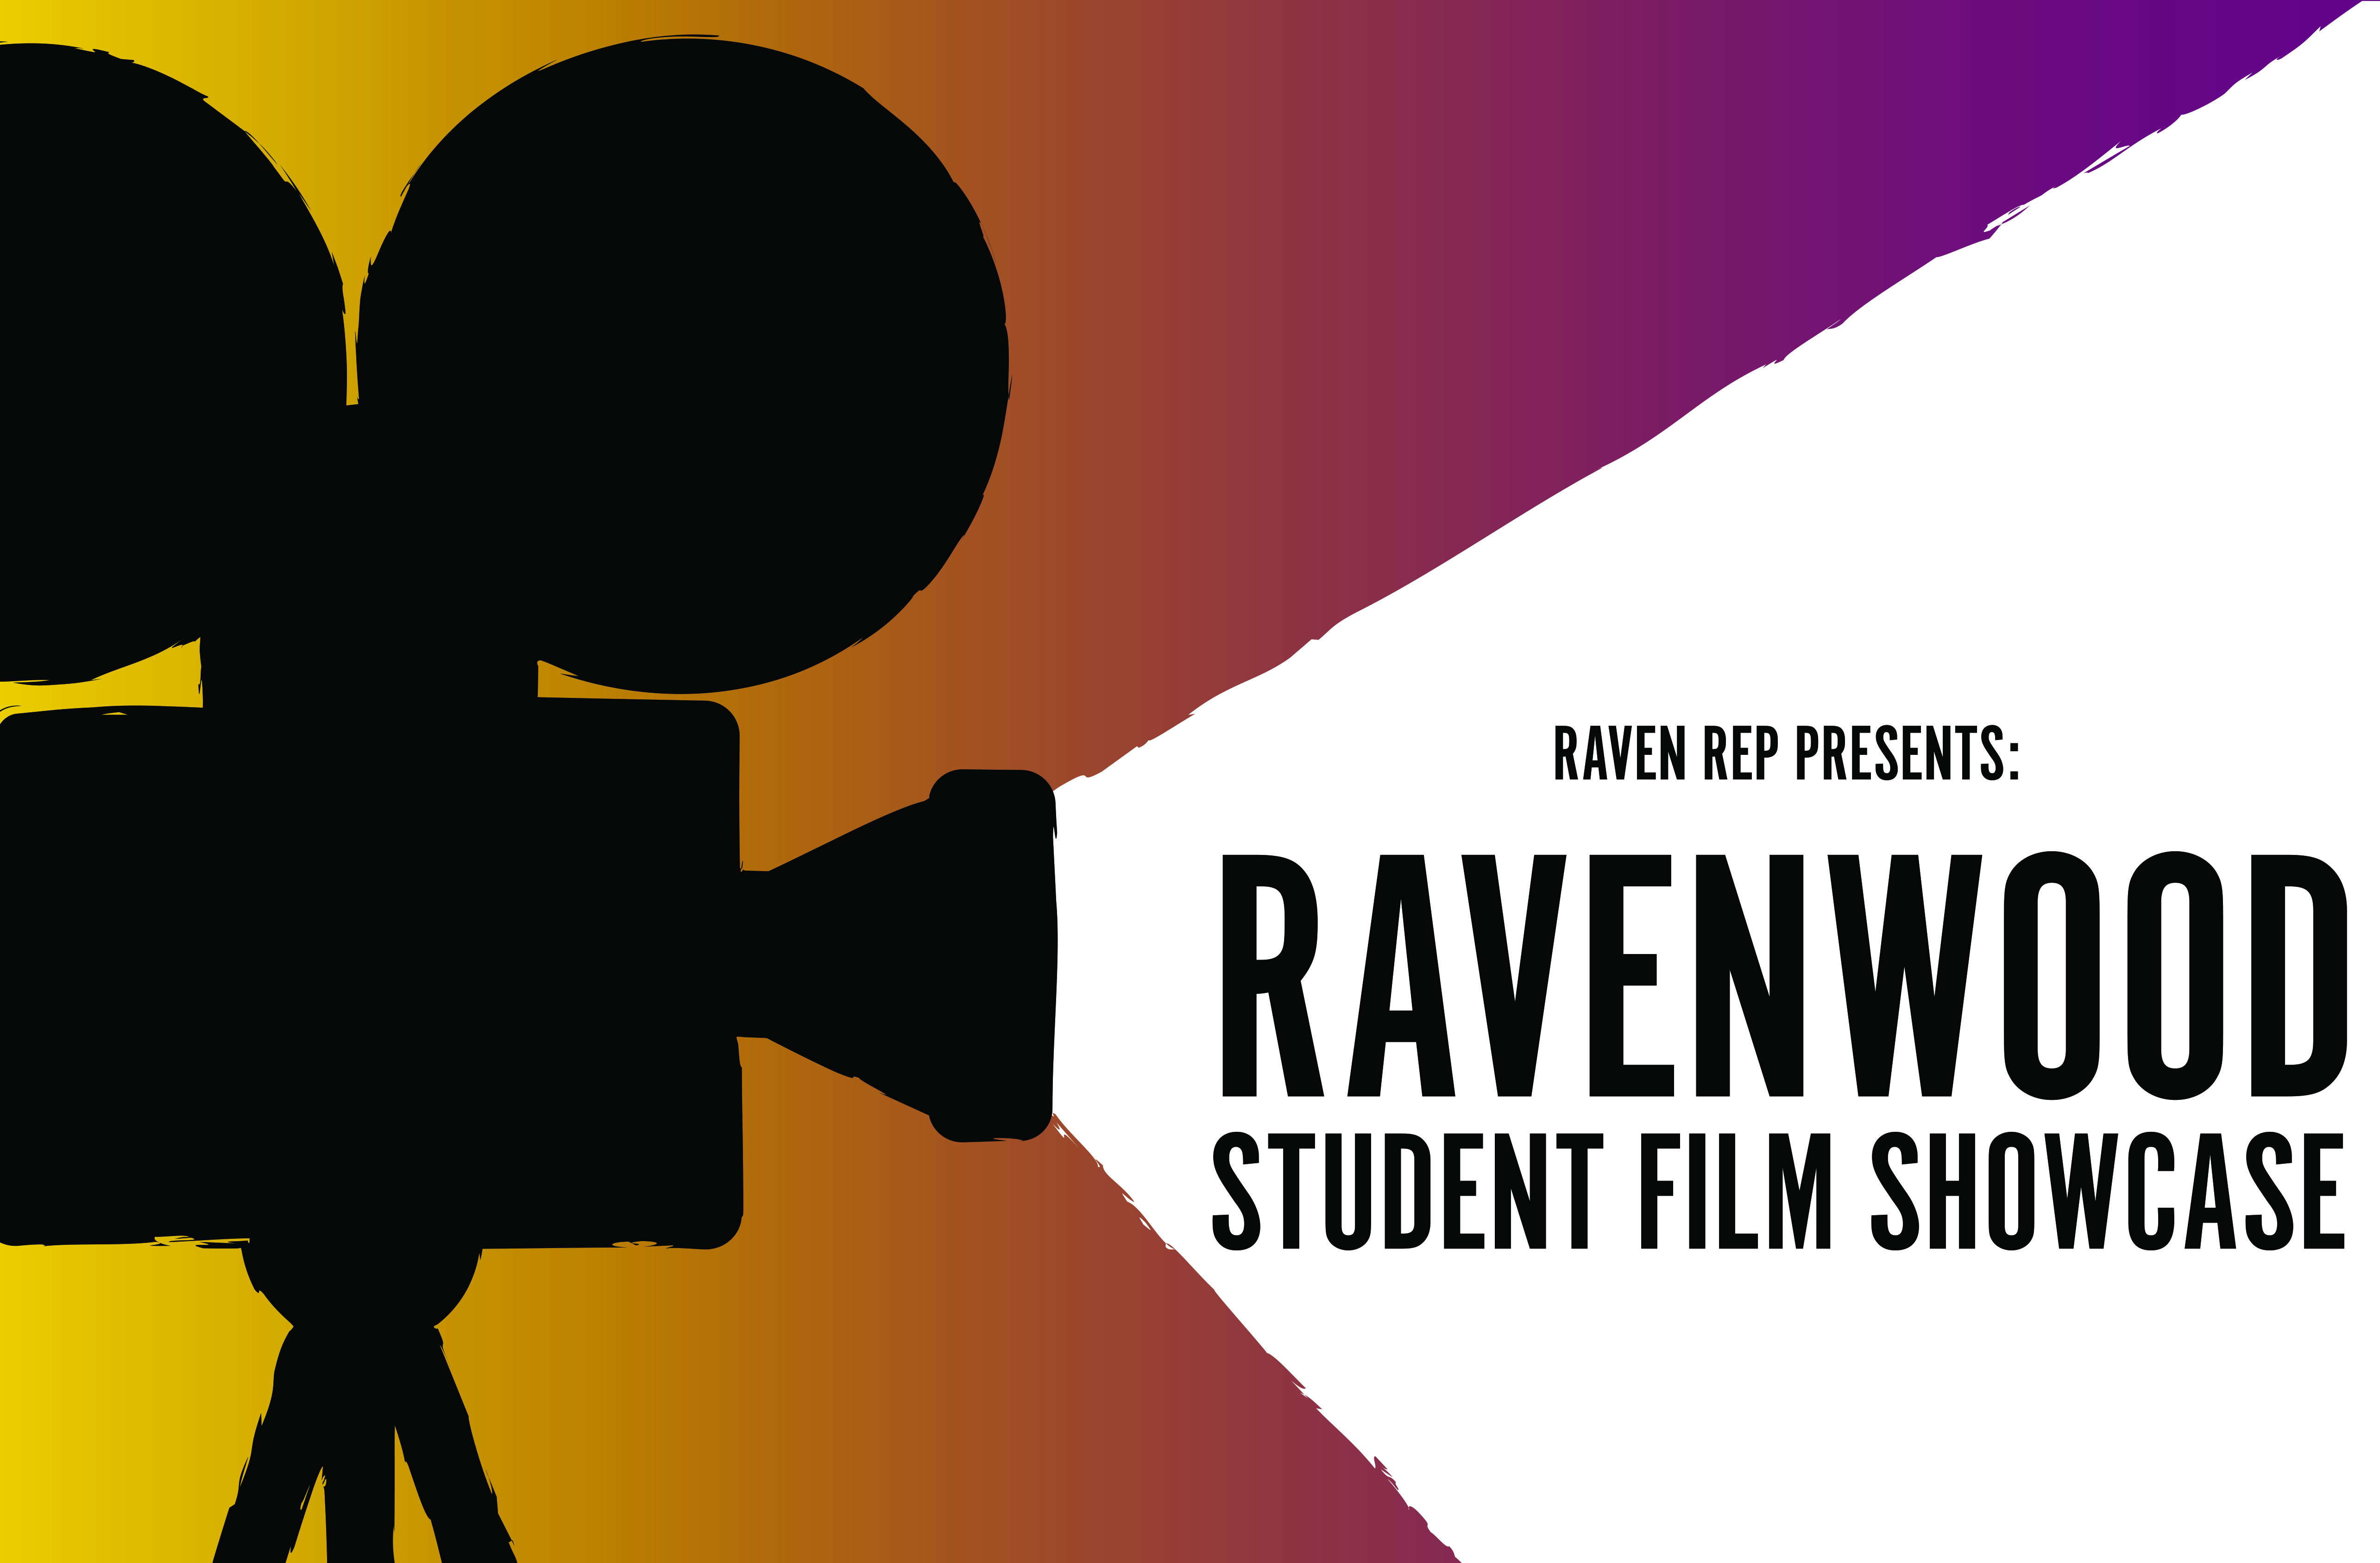 Ravenwood student film showcase